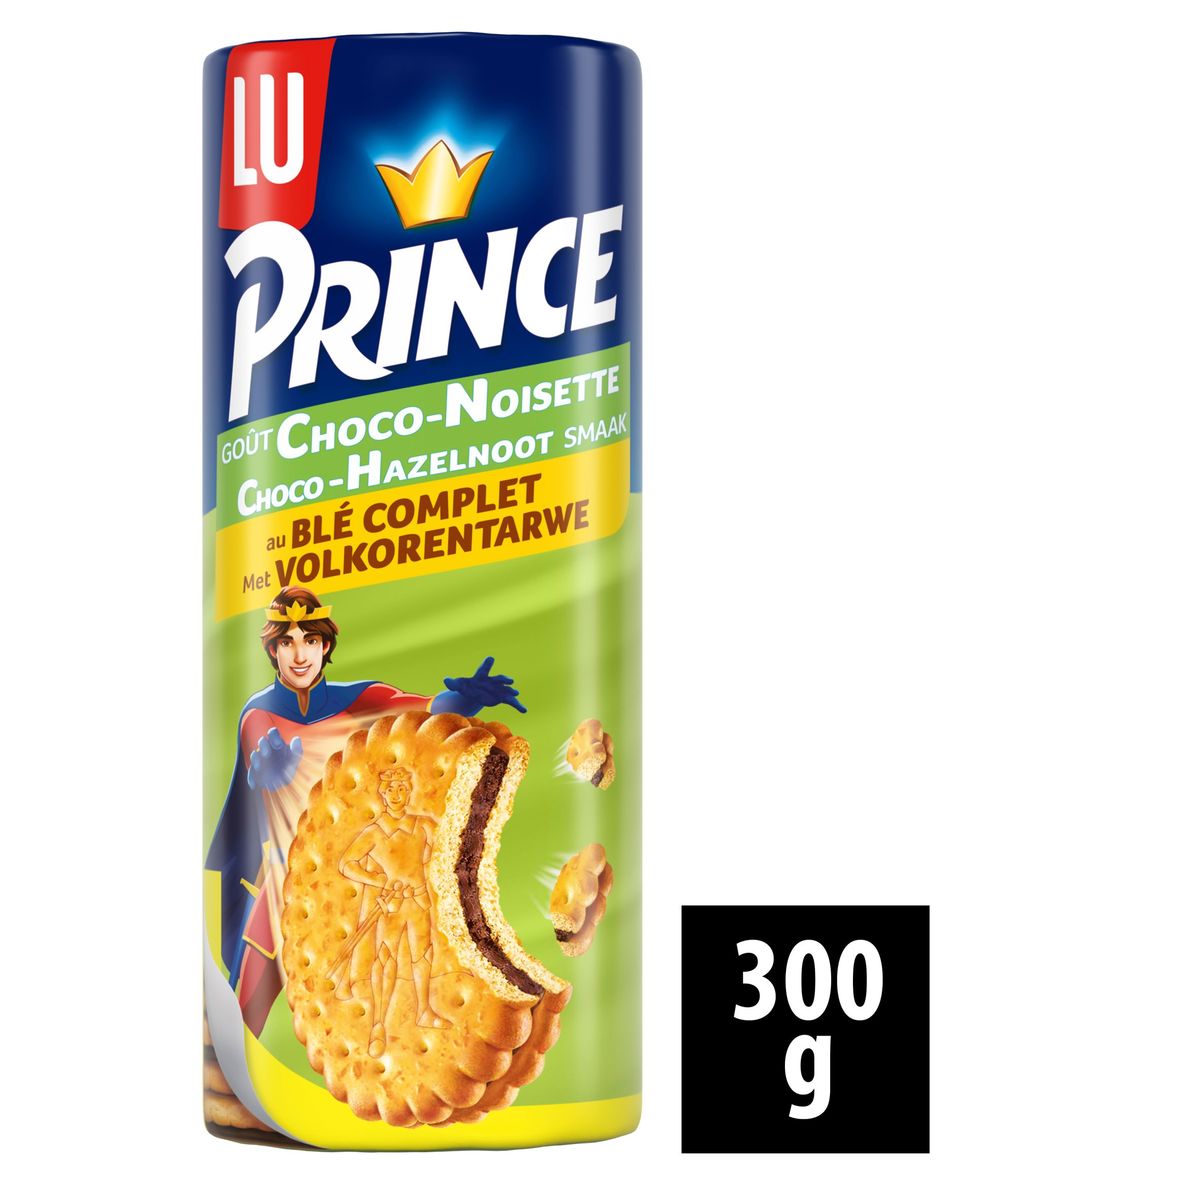 LU Prince Fourré Biscuits Goût Choco Noisette 300 g